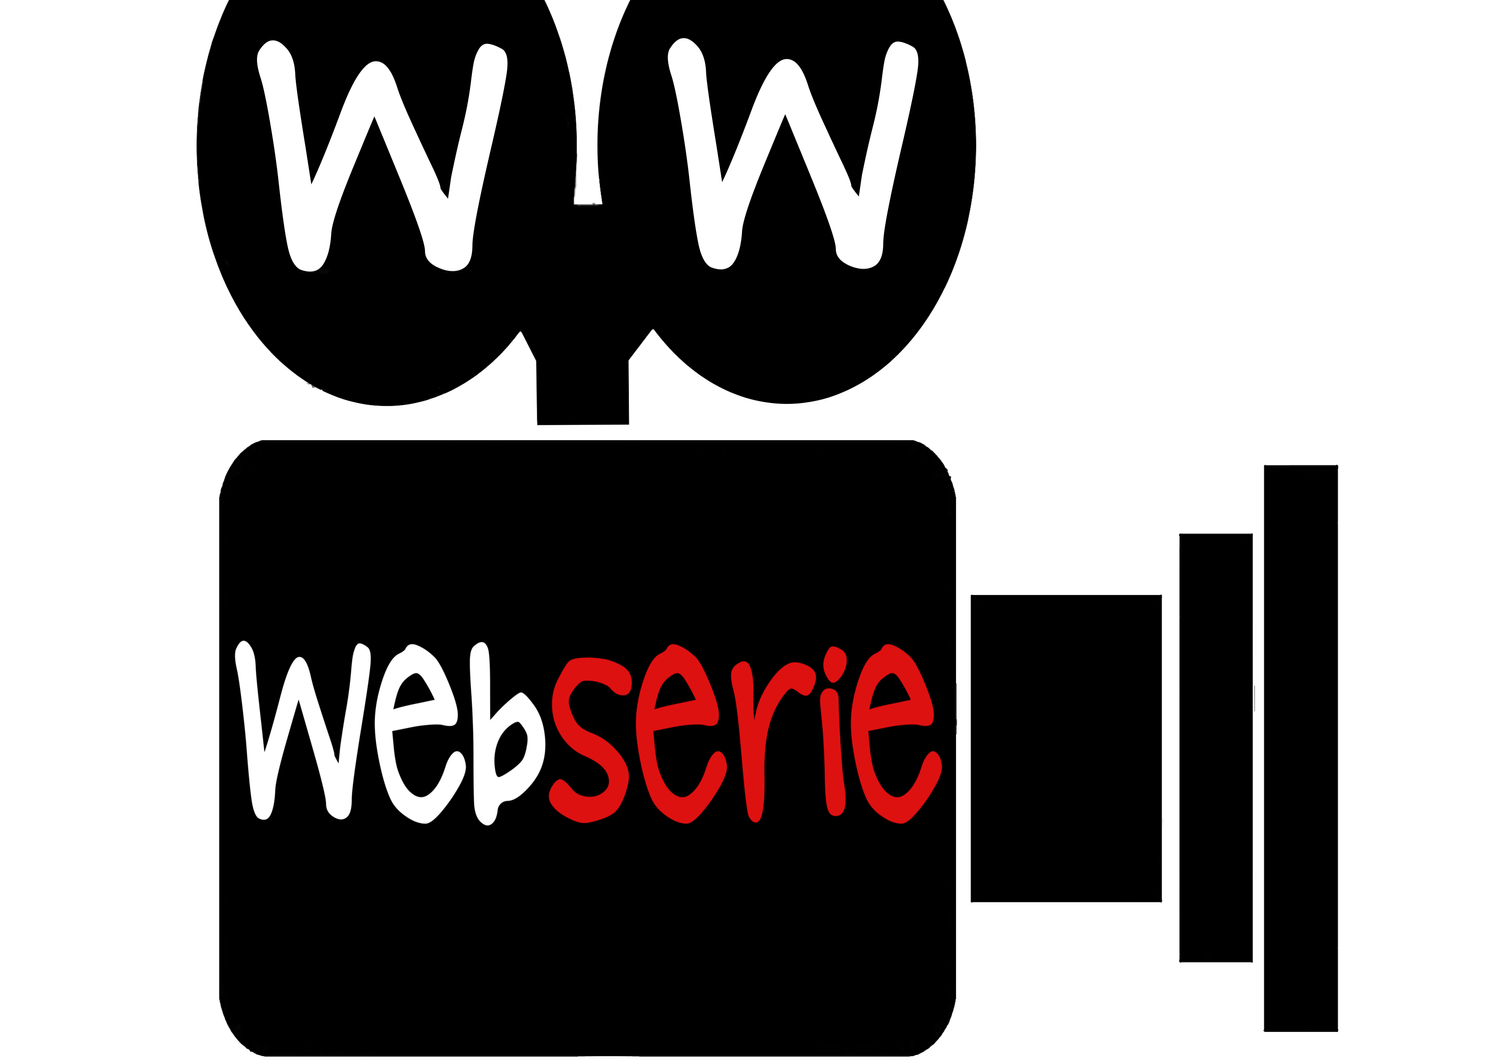 Partnership tra Cubik Tv e World Wide Weberie